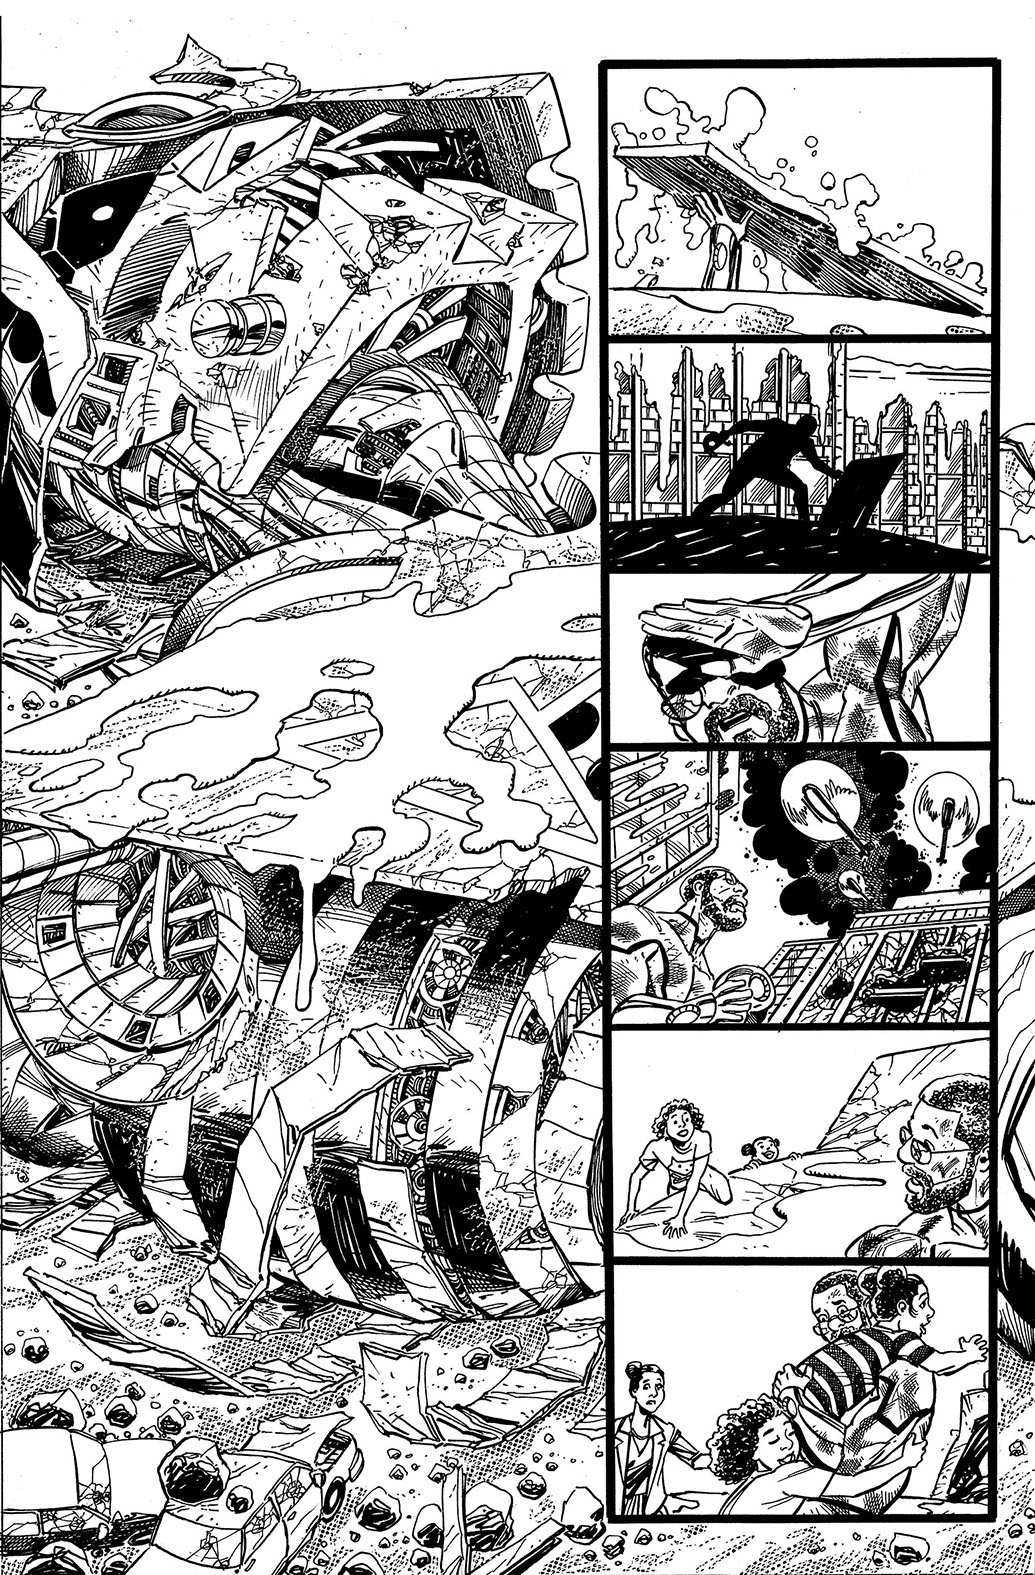 The Giant Kokju from Image Comics